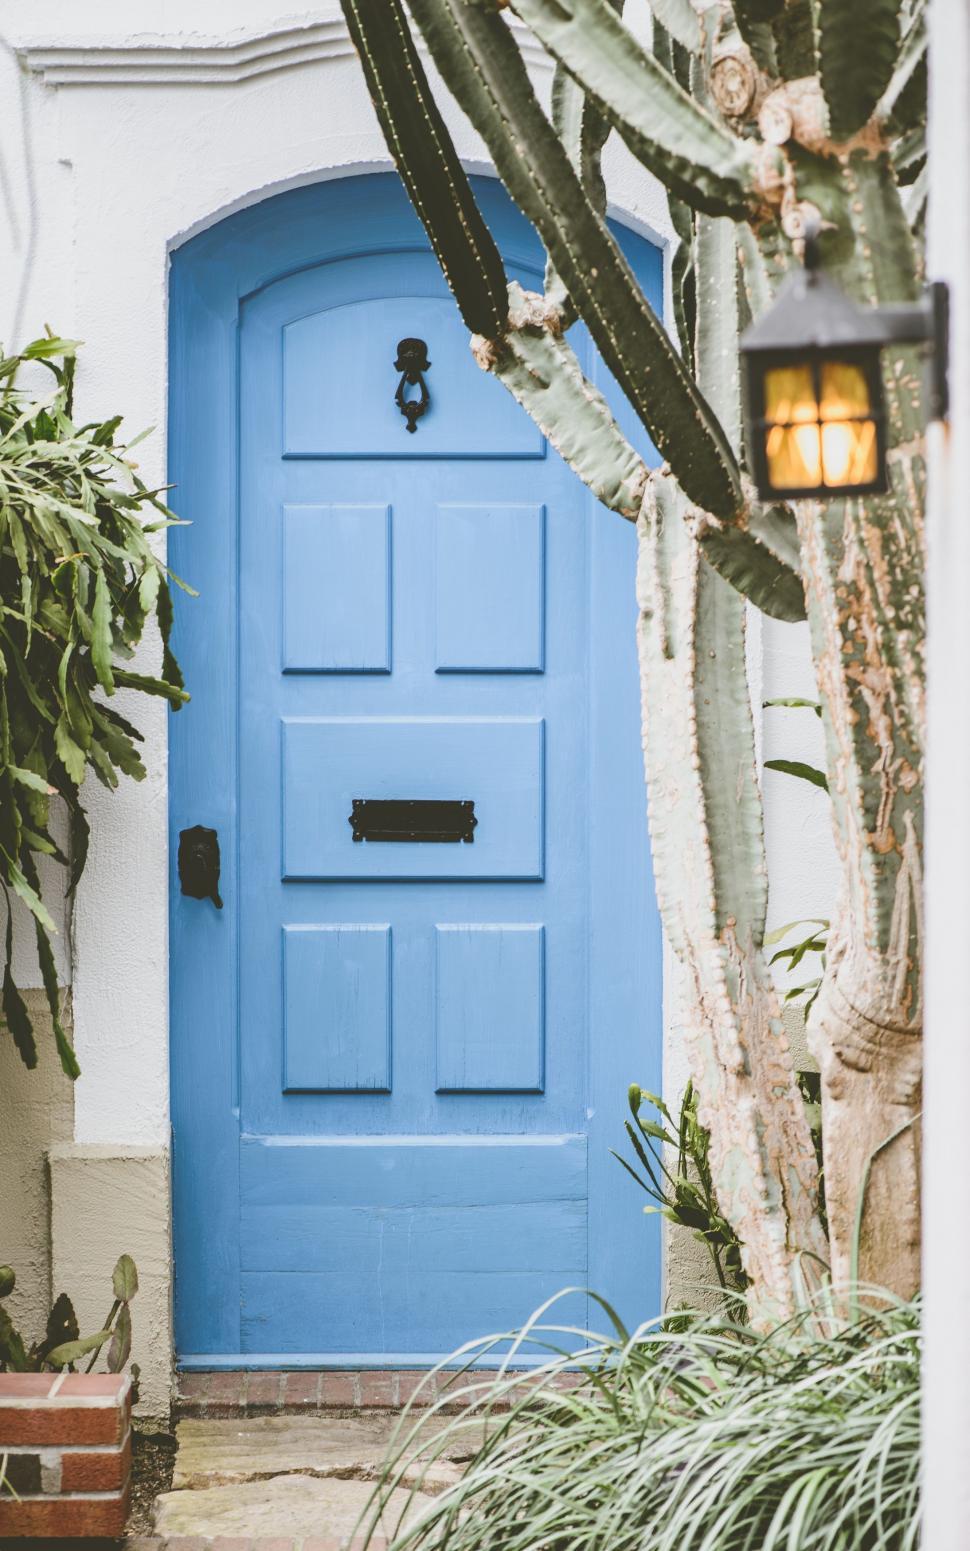 Free Image of Blue Door With Cactus 